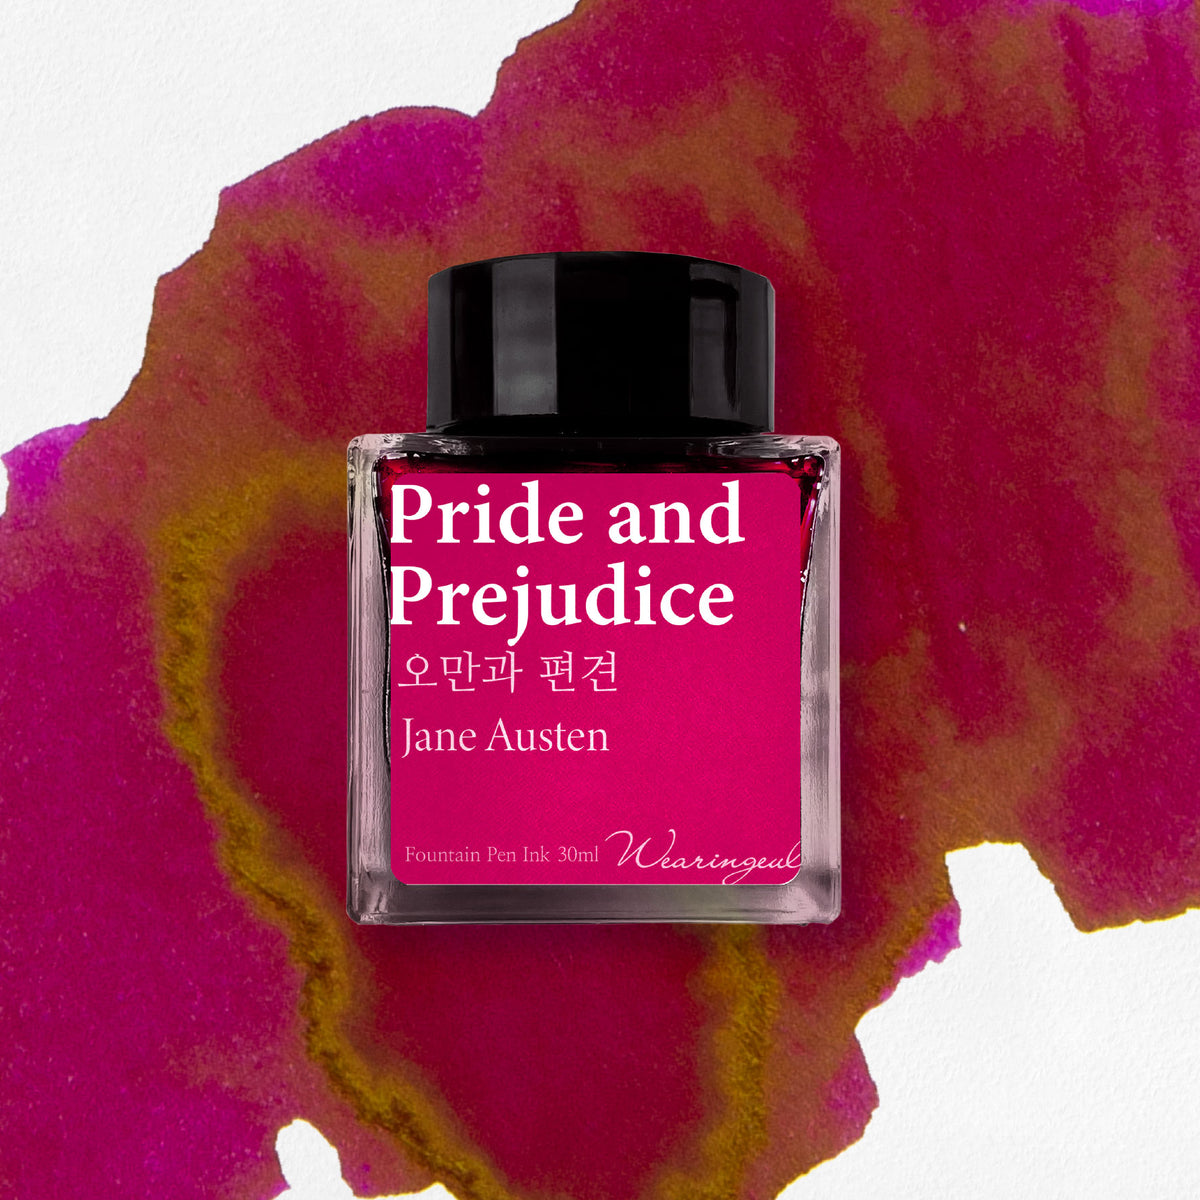 Wearingeul - Fountain Pen Ink - Pride and Prejudice